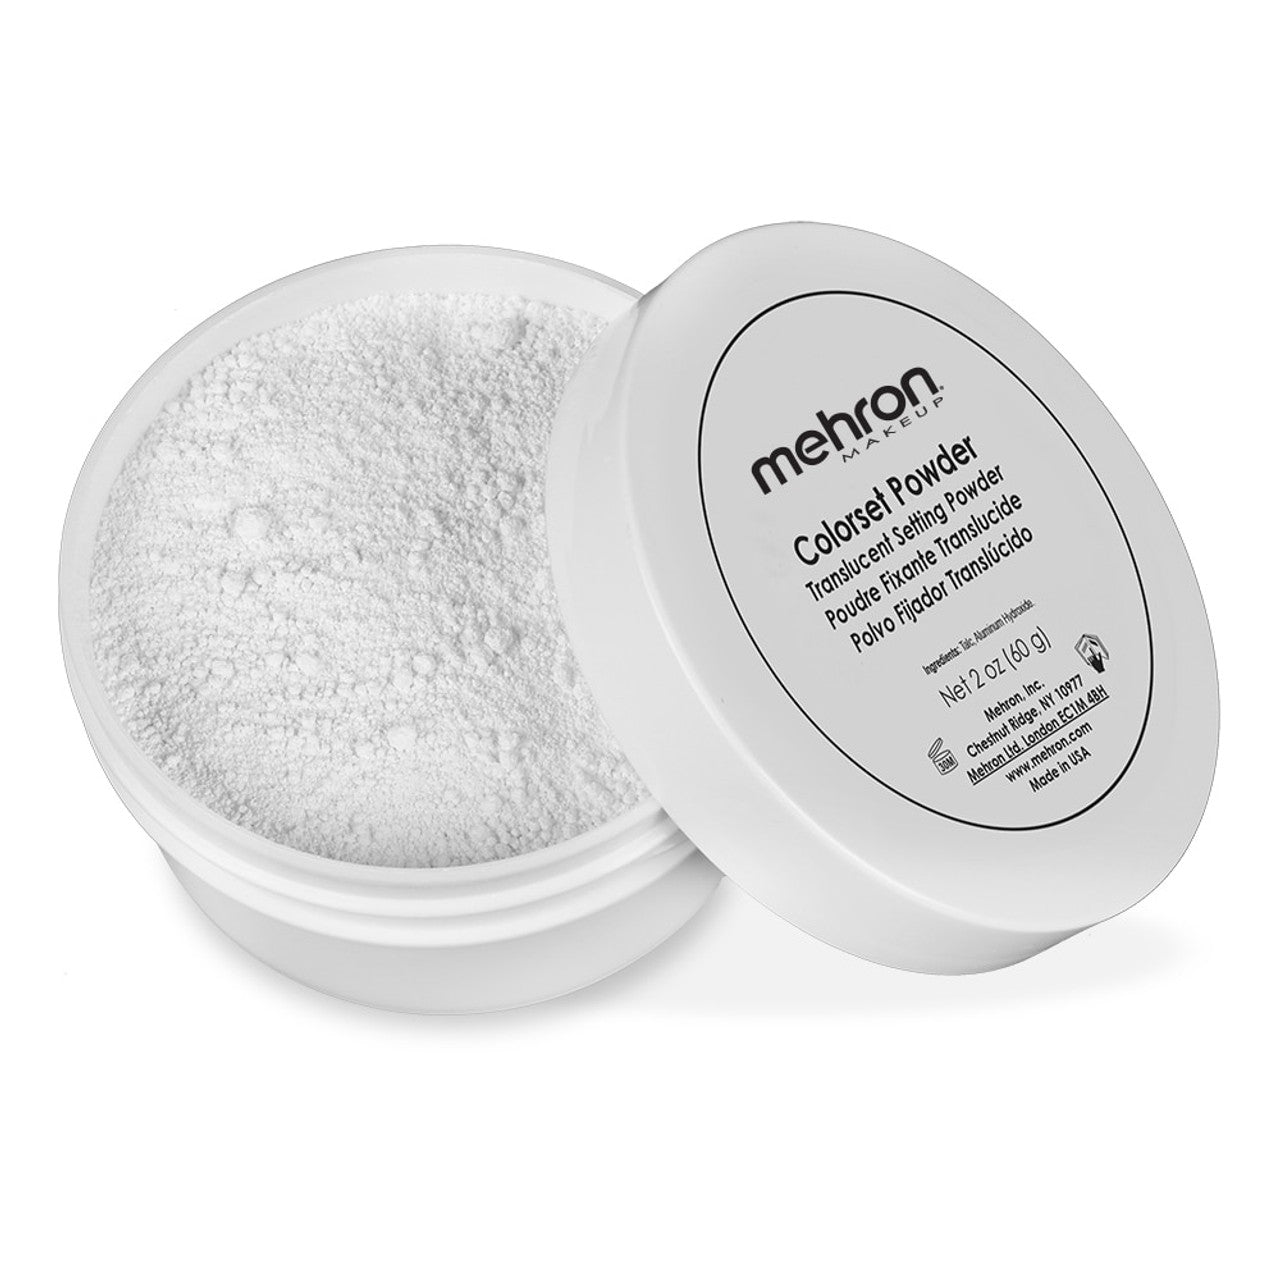 Mehron COSTUMES: MAKE-UP Colorset Powder (2oz)